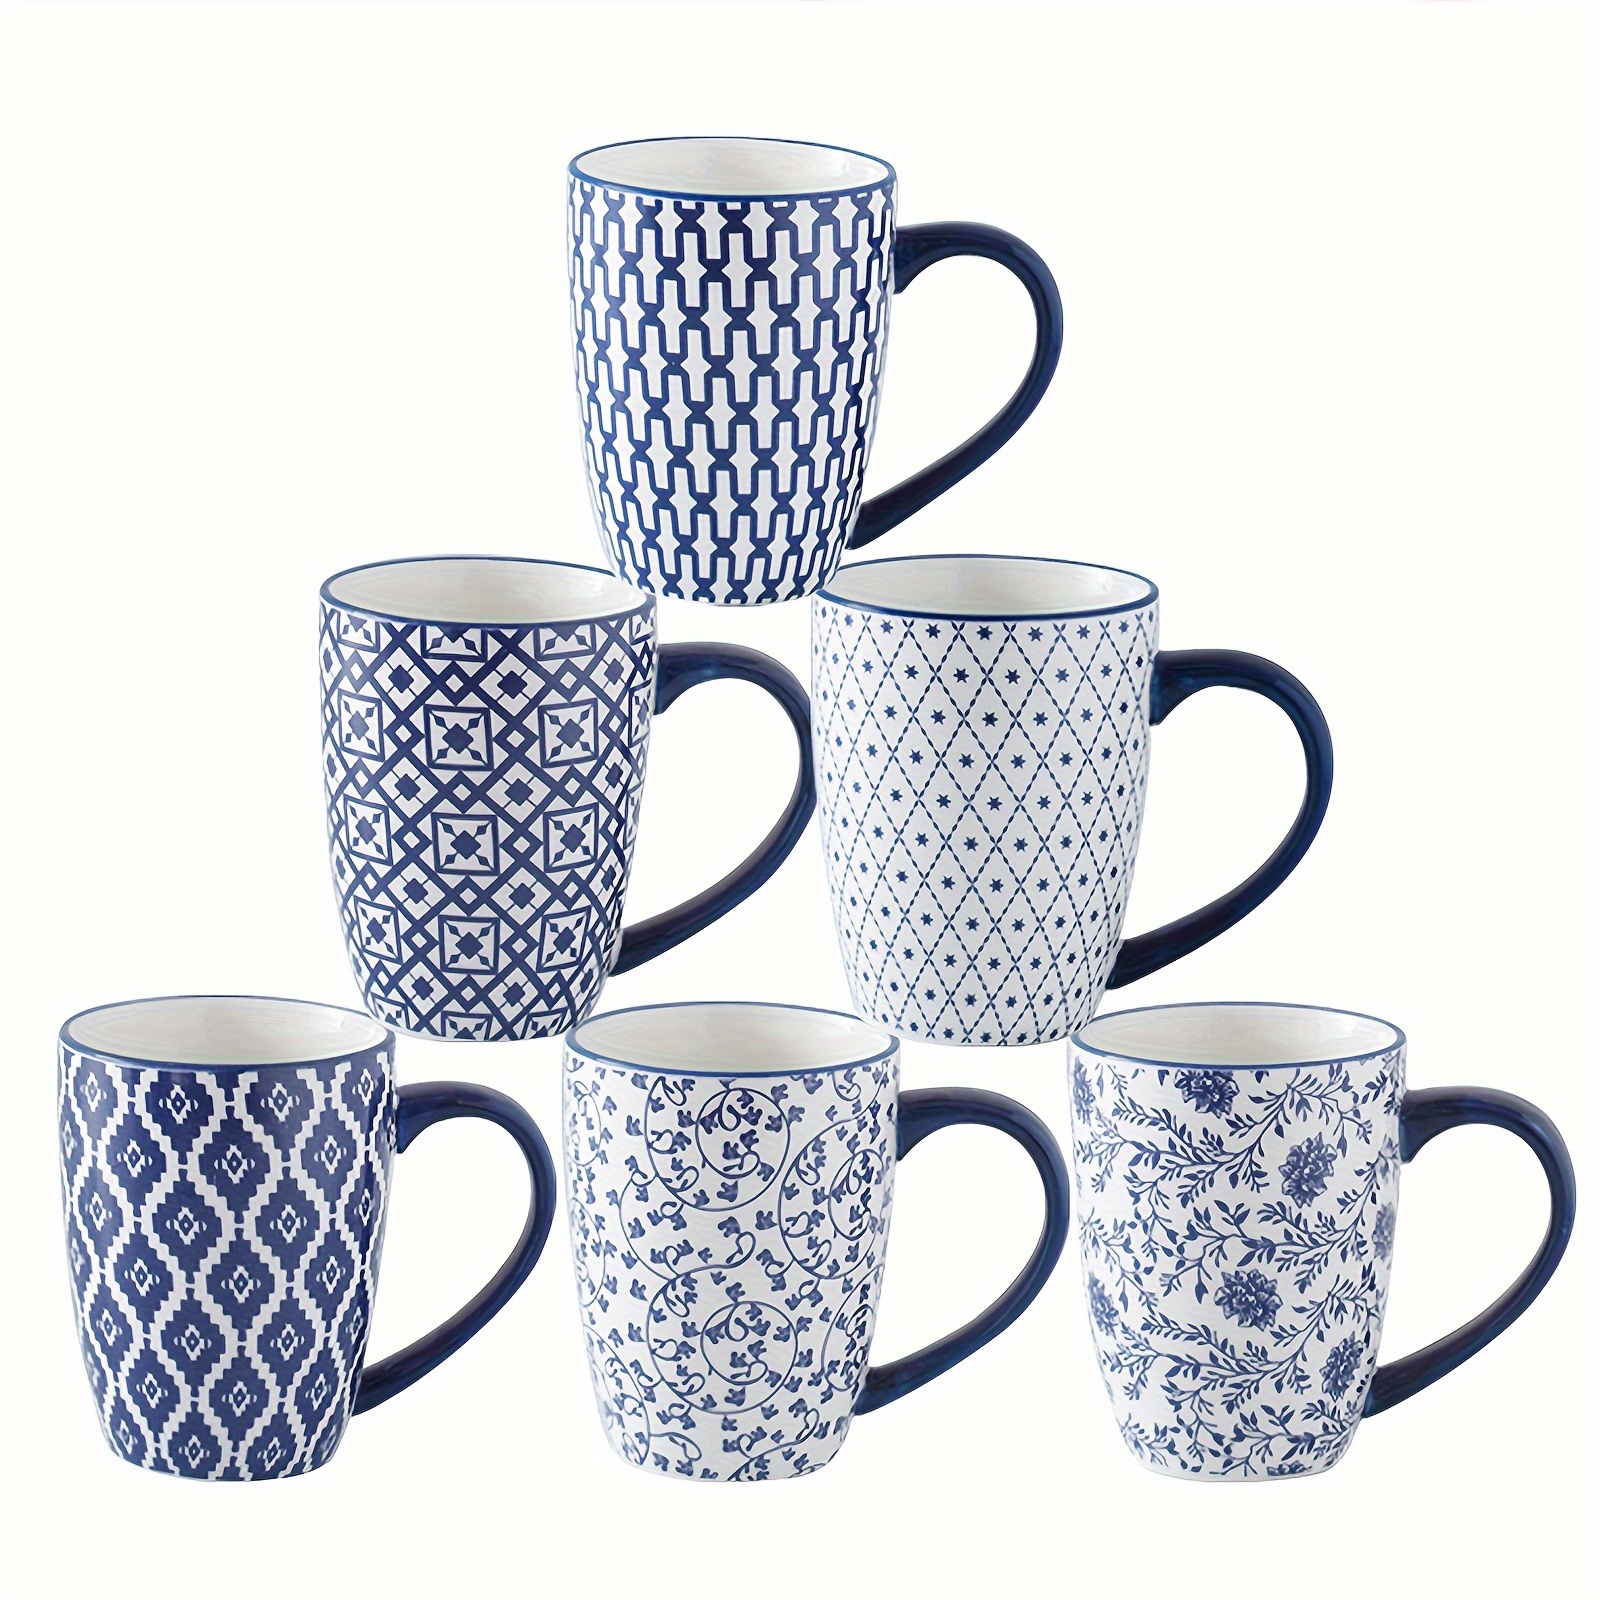 

6pcs, 16 Oz Ceramic Coffee Mugs Set, Cerkik Large Porcelain Tea Cups With Handle For Women, Men, Cocoa, Latte, Cappuccino, Christmas, Housewarming, Gift, Microwave Dishwasher Safe, Vintage Blue